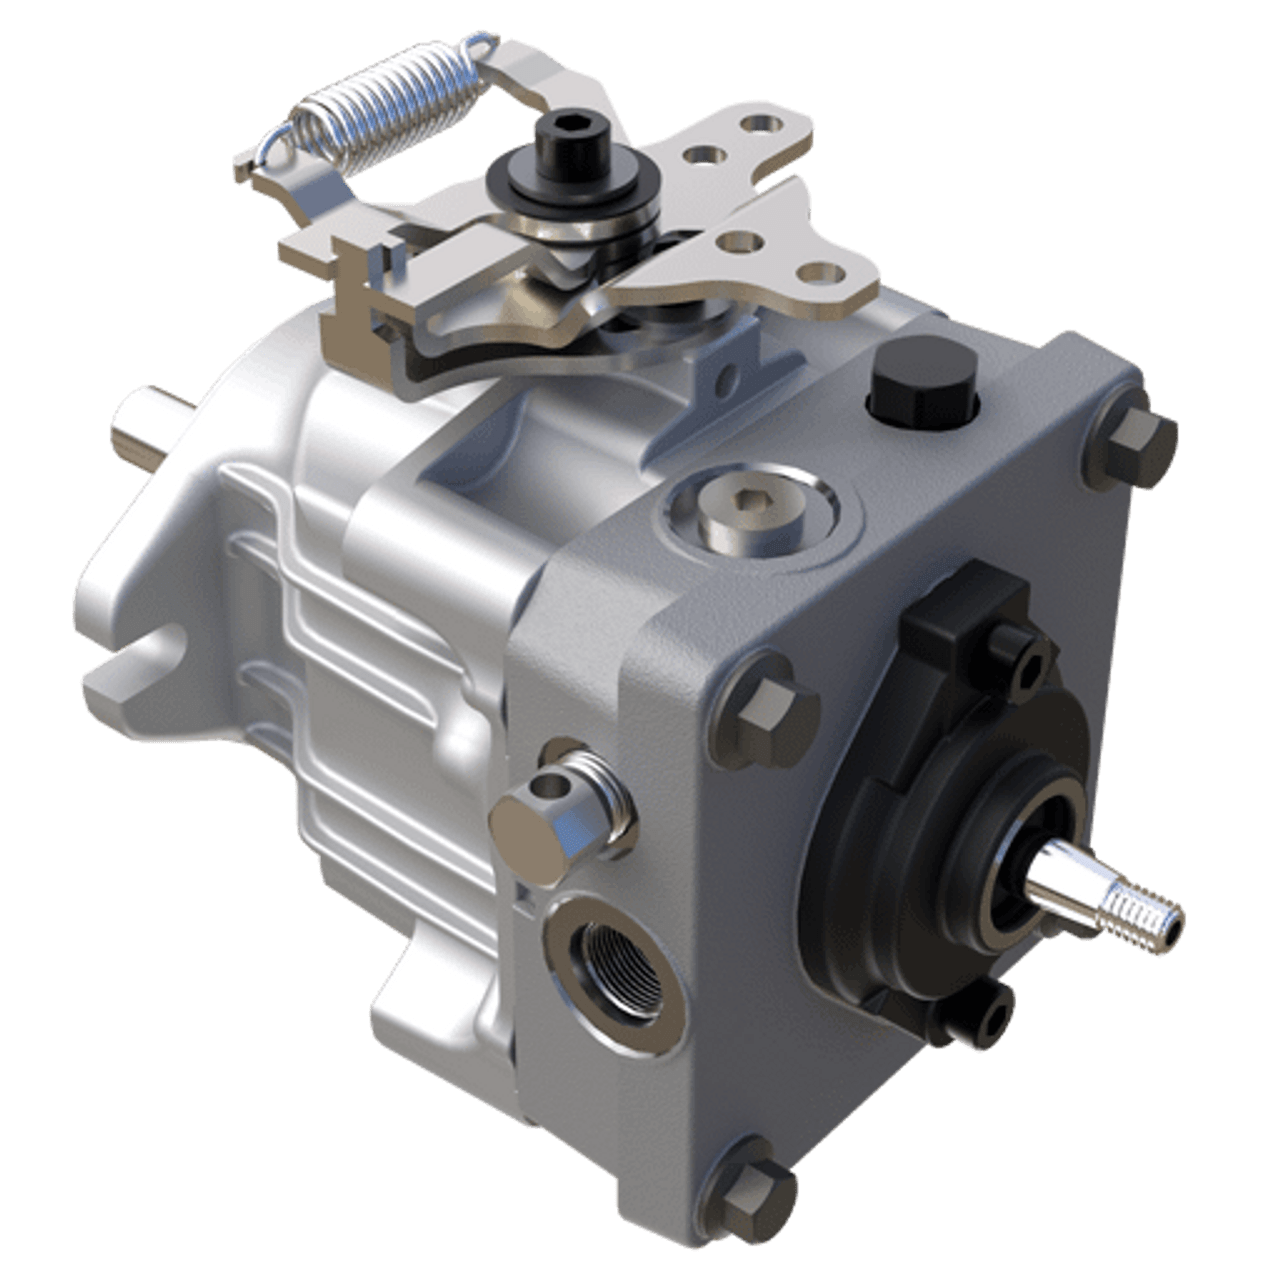 Hydro Gear PG-1GNP-DY1X-XXXX Hydraulic Pump P Series | Original OEM Part | Free Shipping - LawnMowerPartsWorld.com